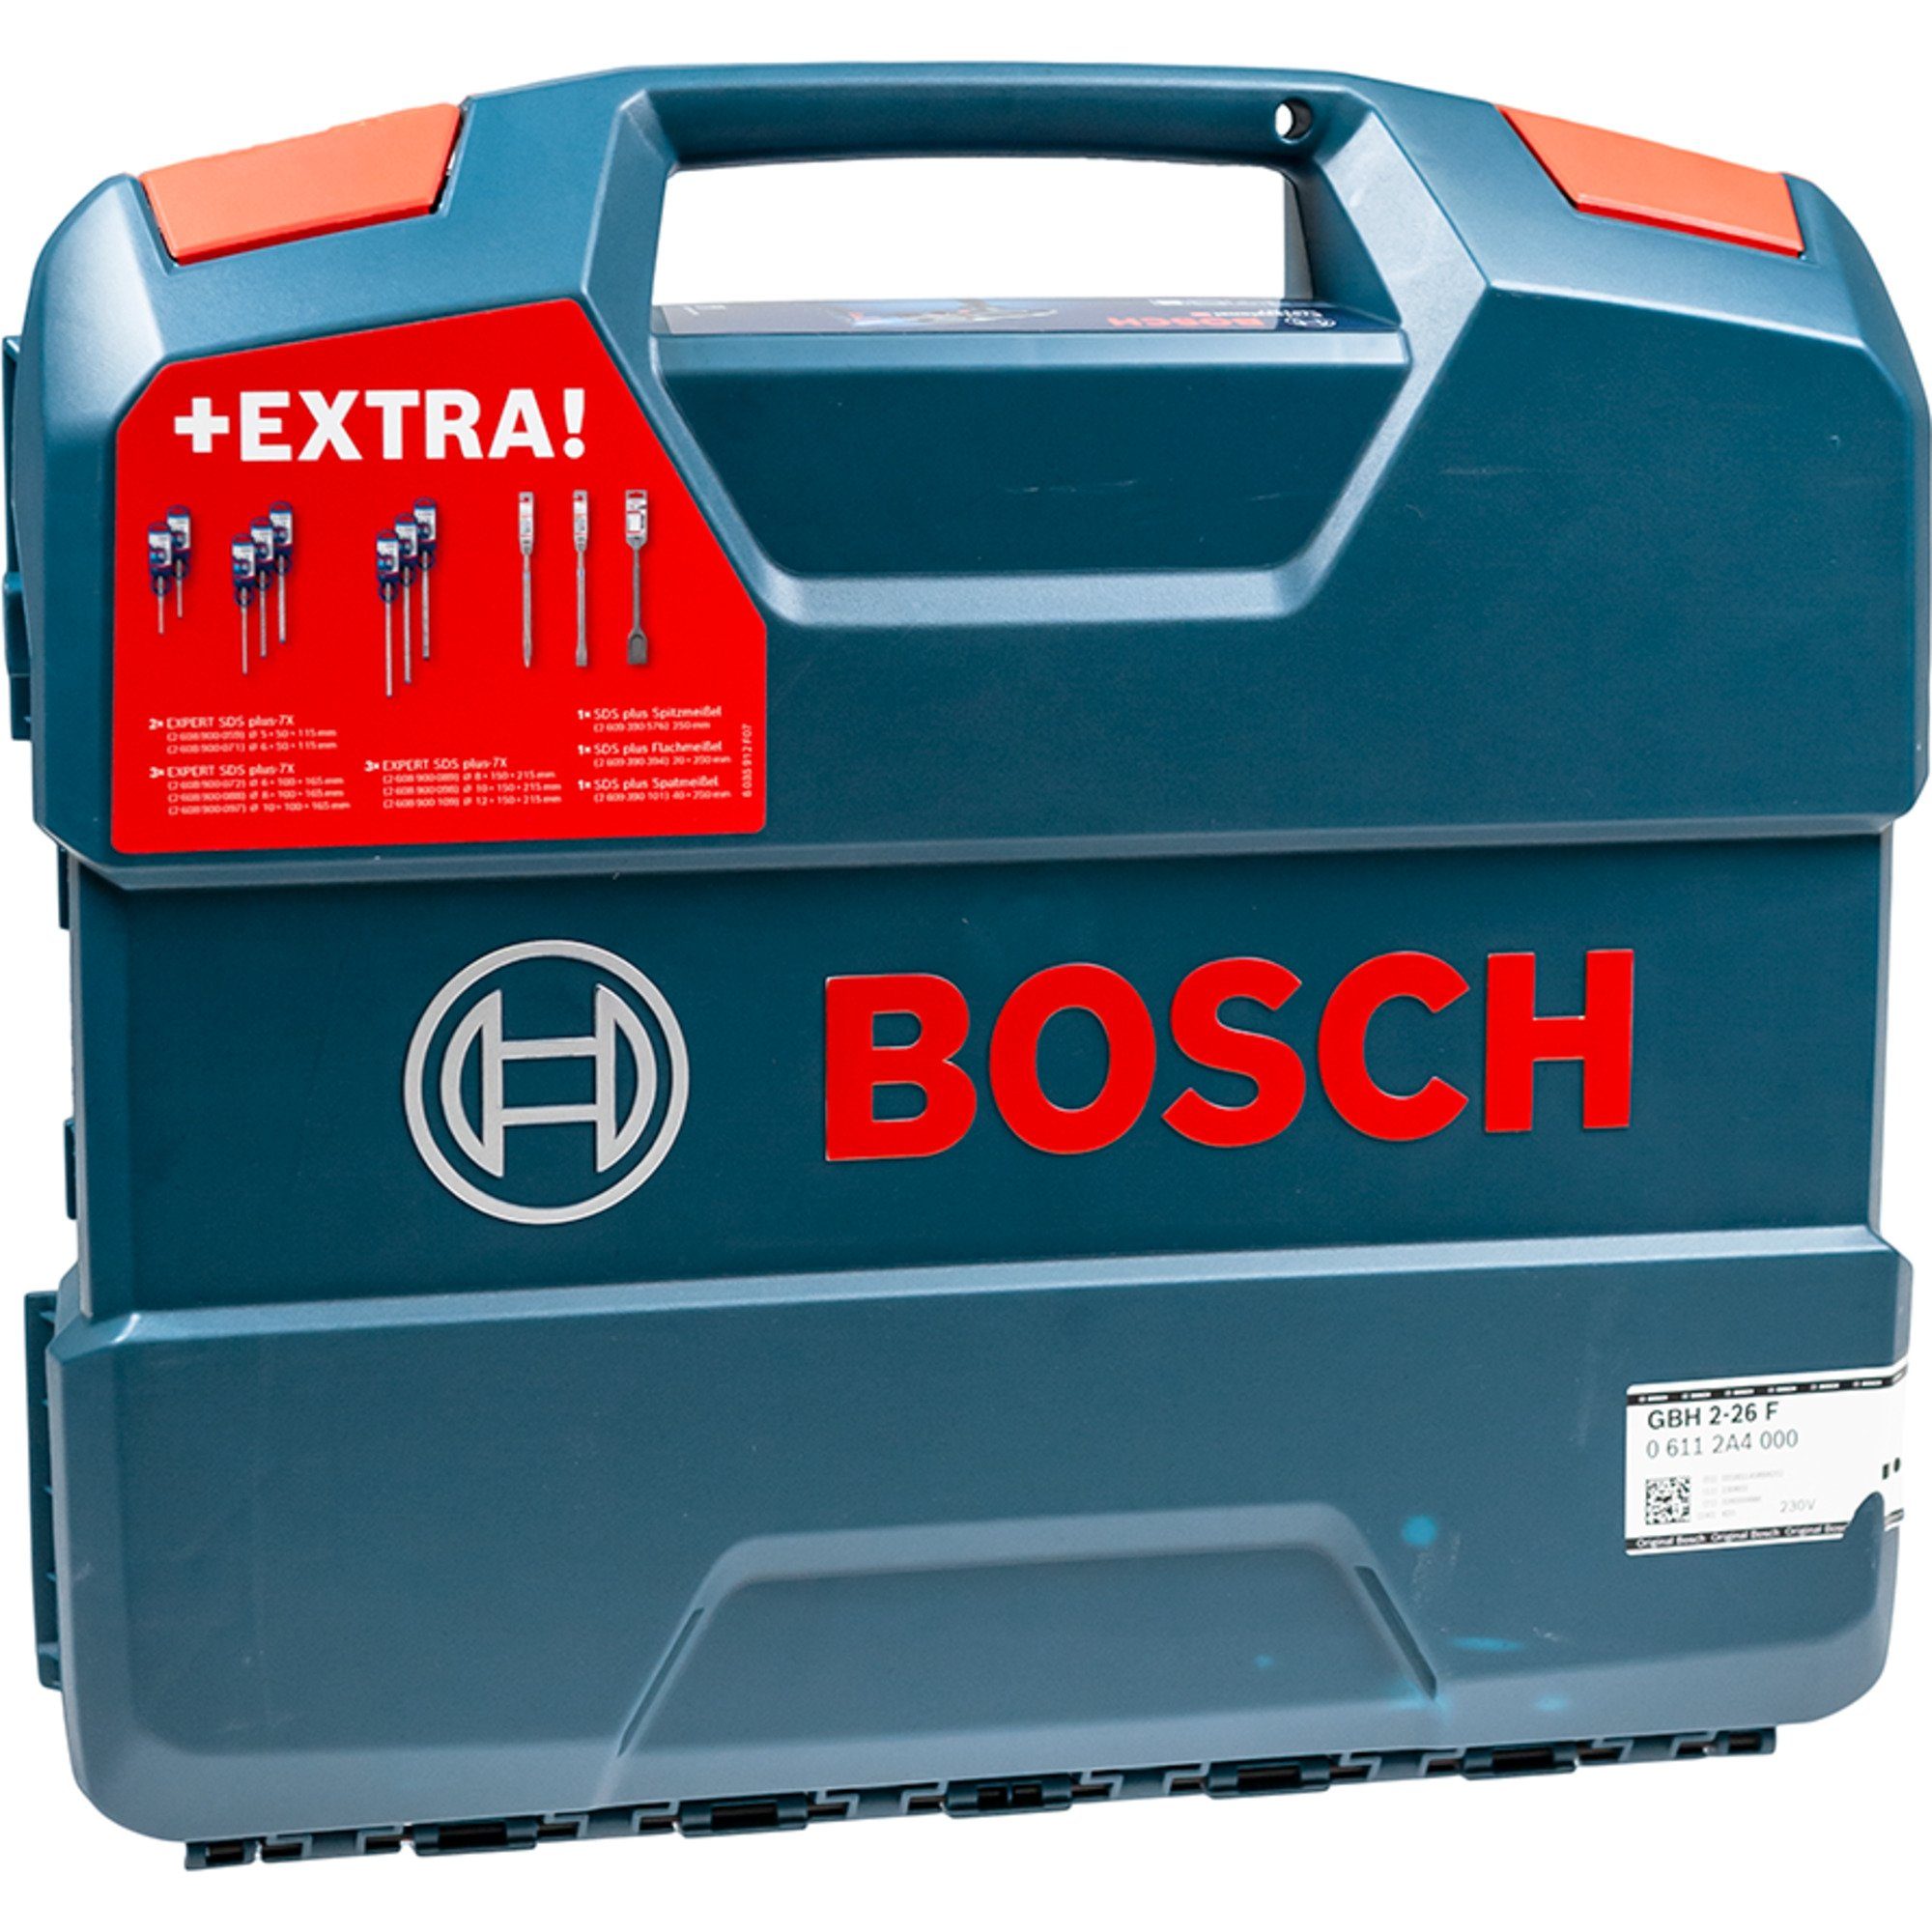 BOSCH Bohrhammer Bosch Bohrhammer Professional 2-26 GBH F